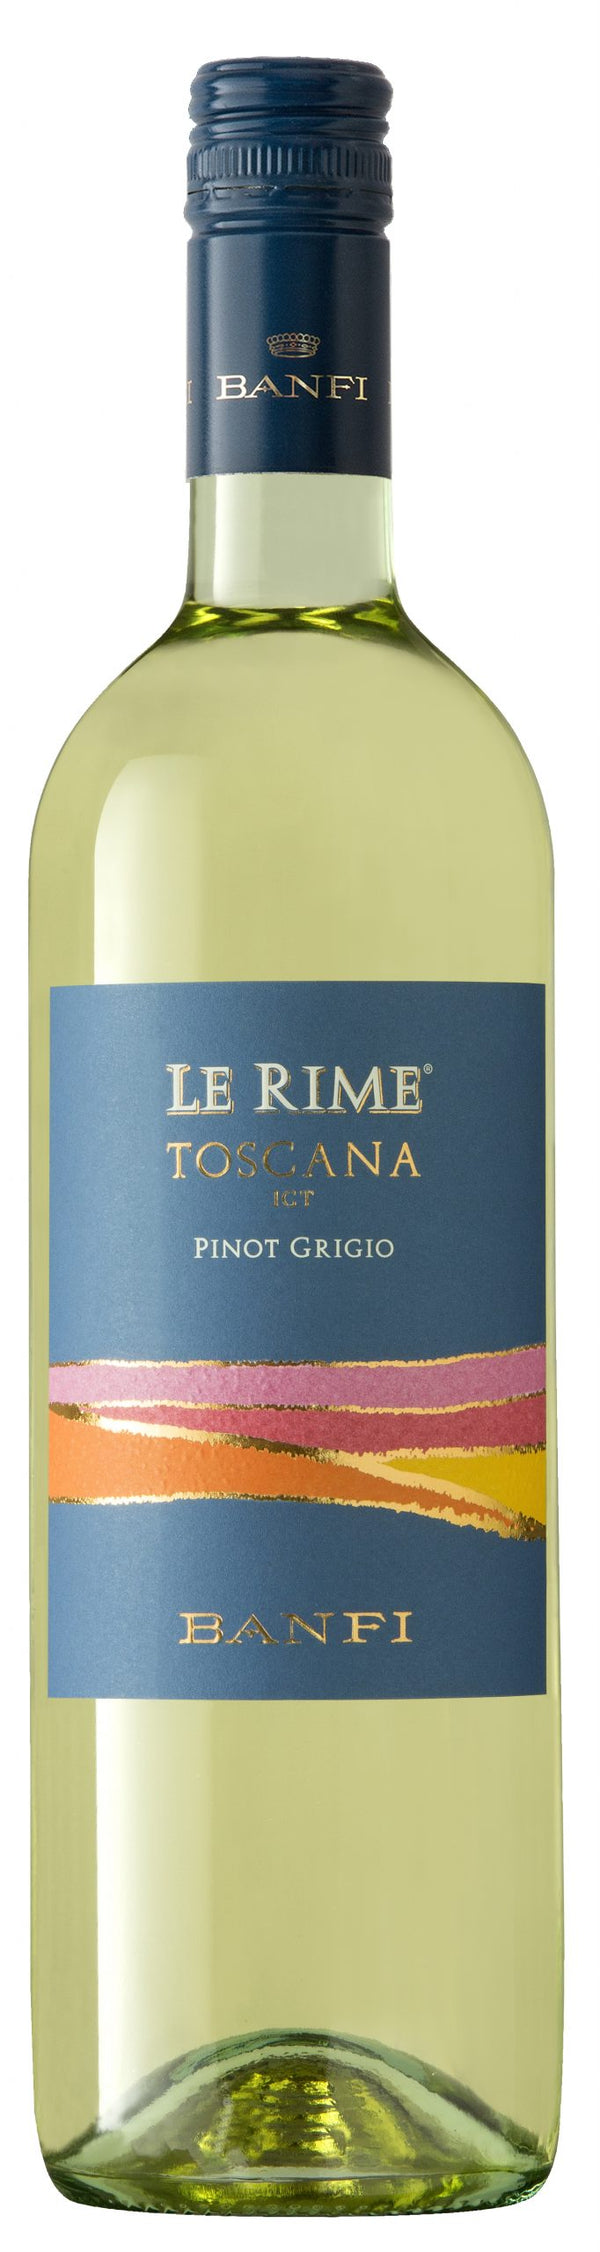 Banfi Le Rime Pinot Grigio, Tuscany